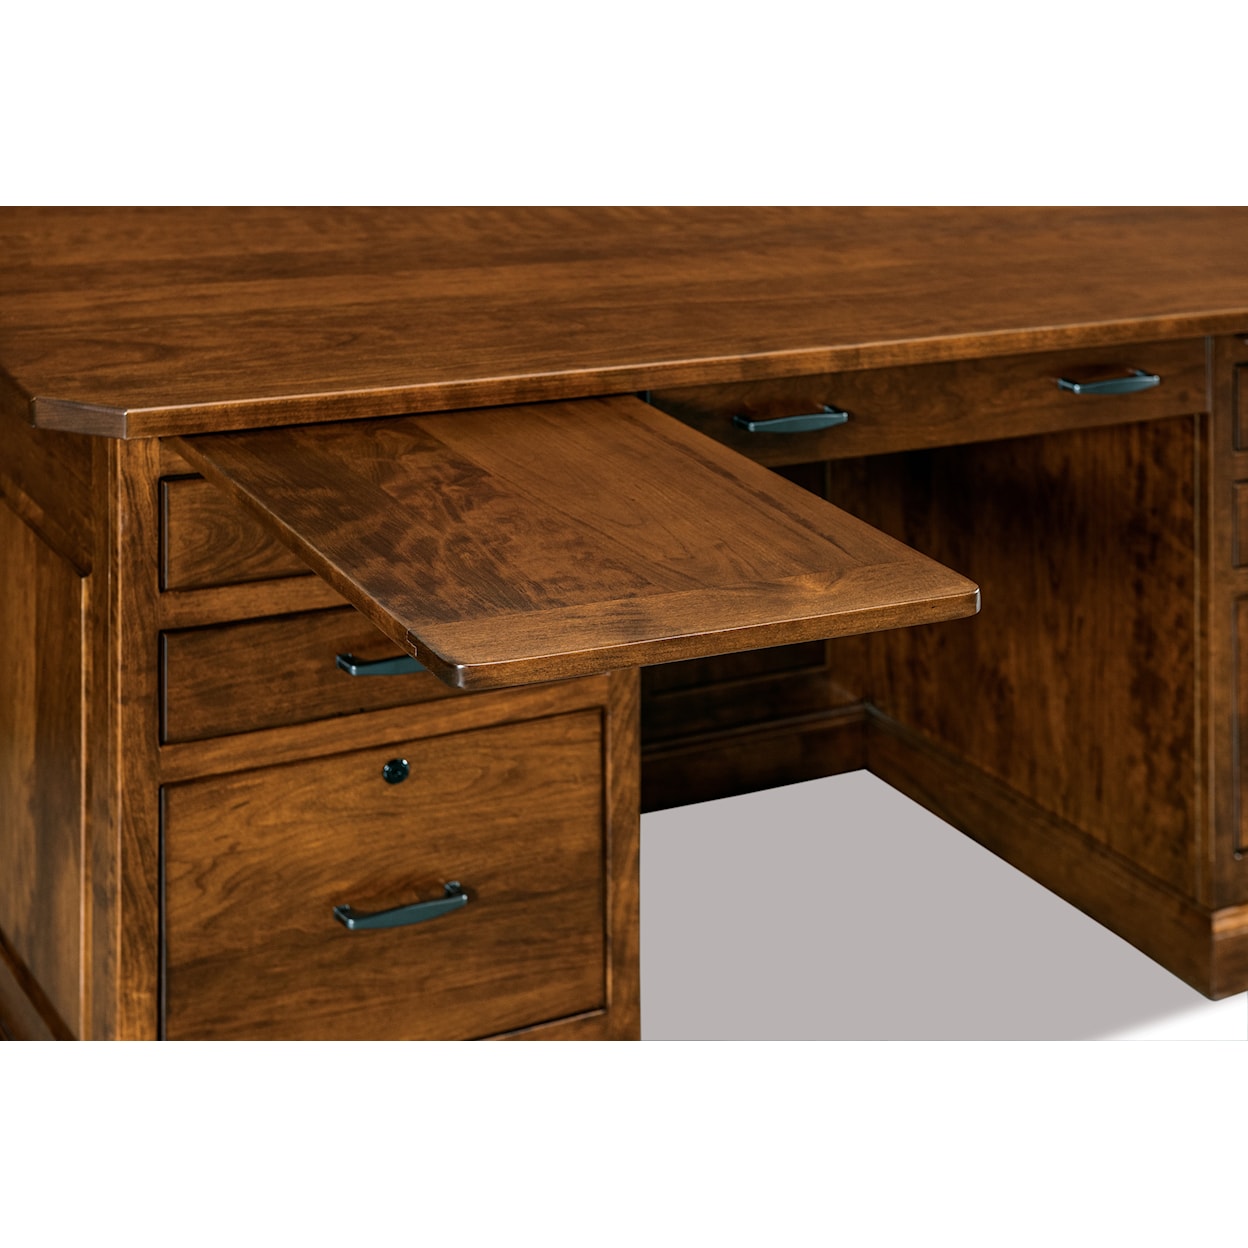 Archbold Furniture Bob Timberlake Signature Executive Desk